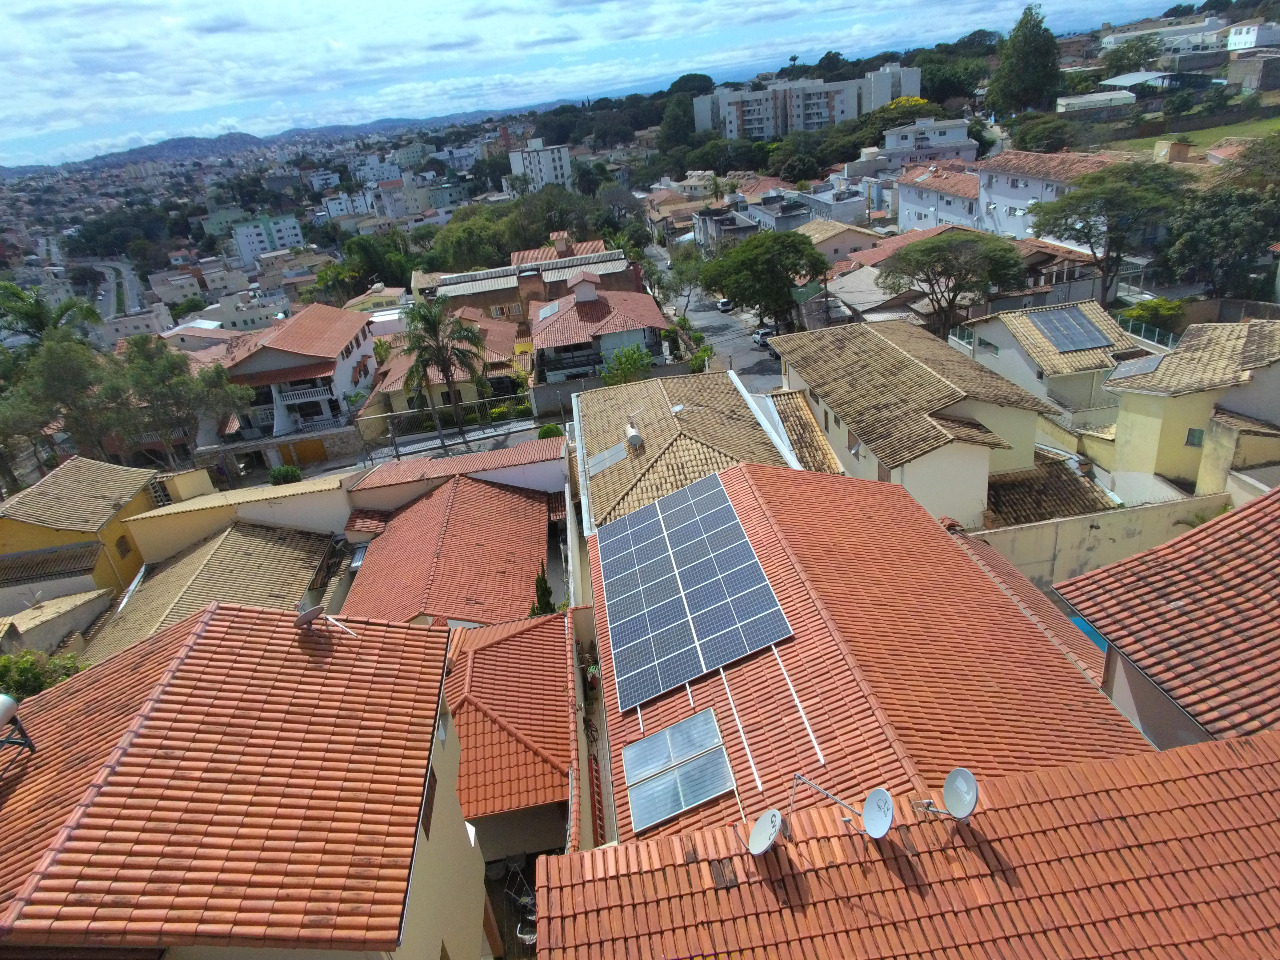 energia-solar-residencial-cpe